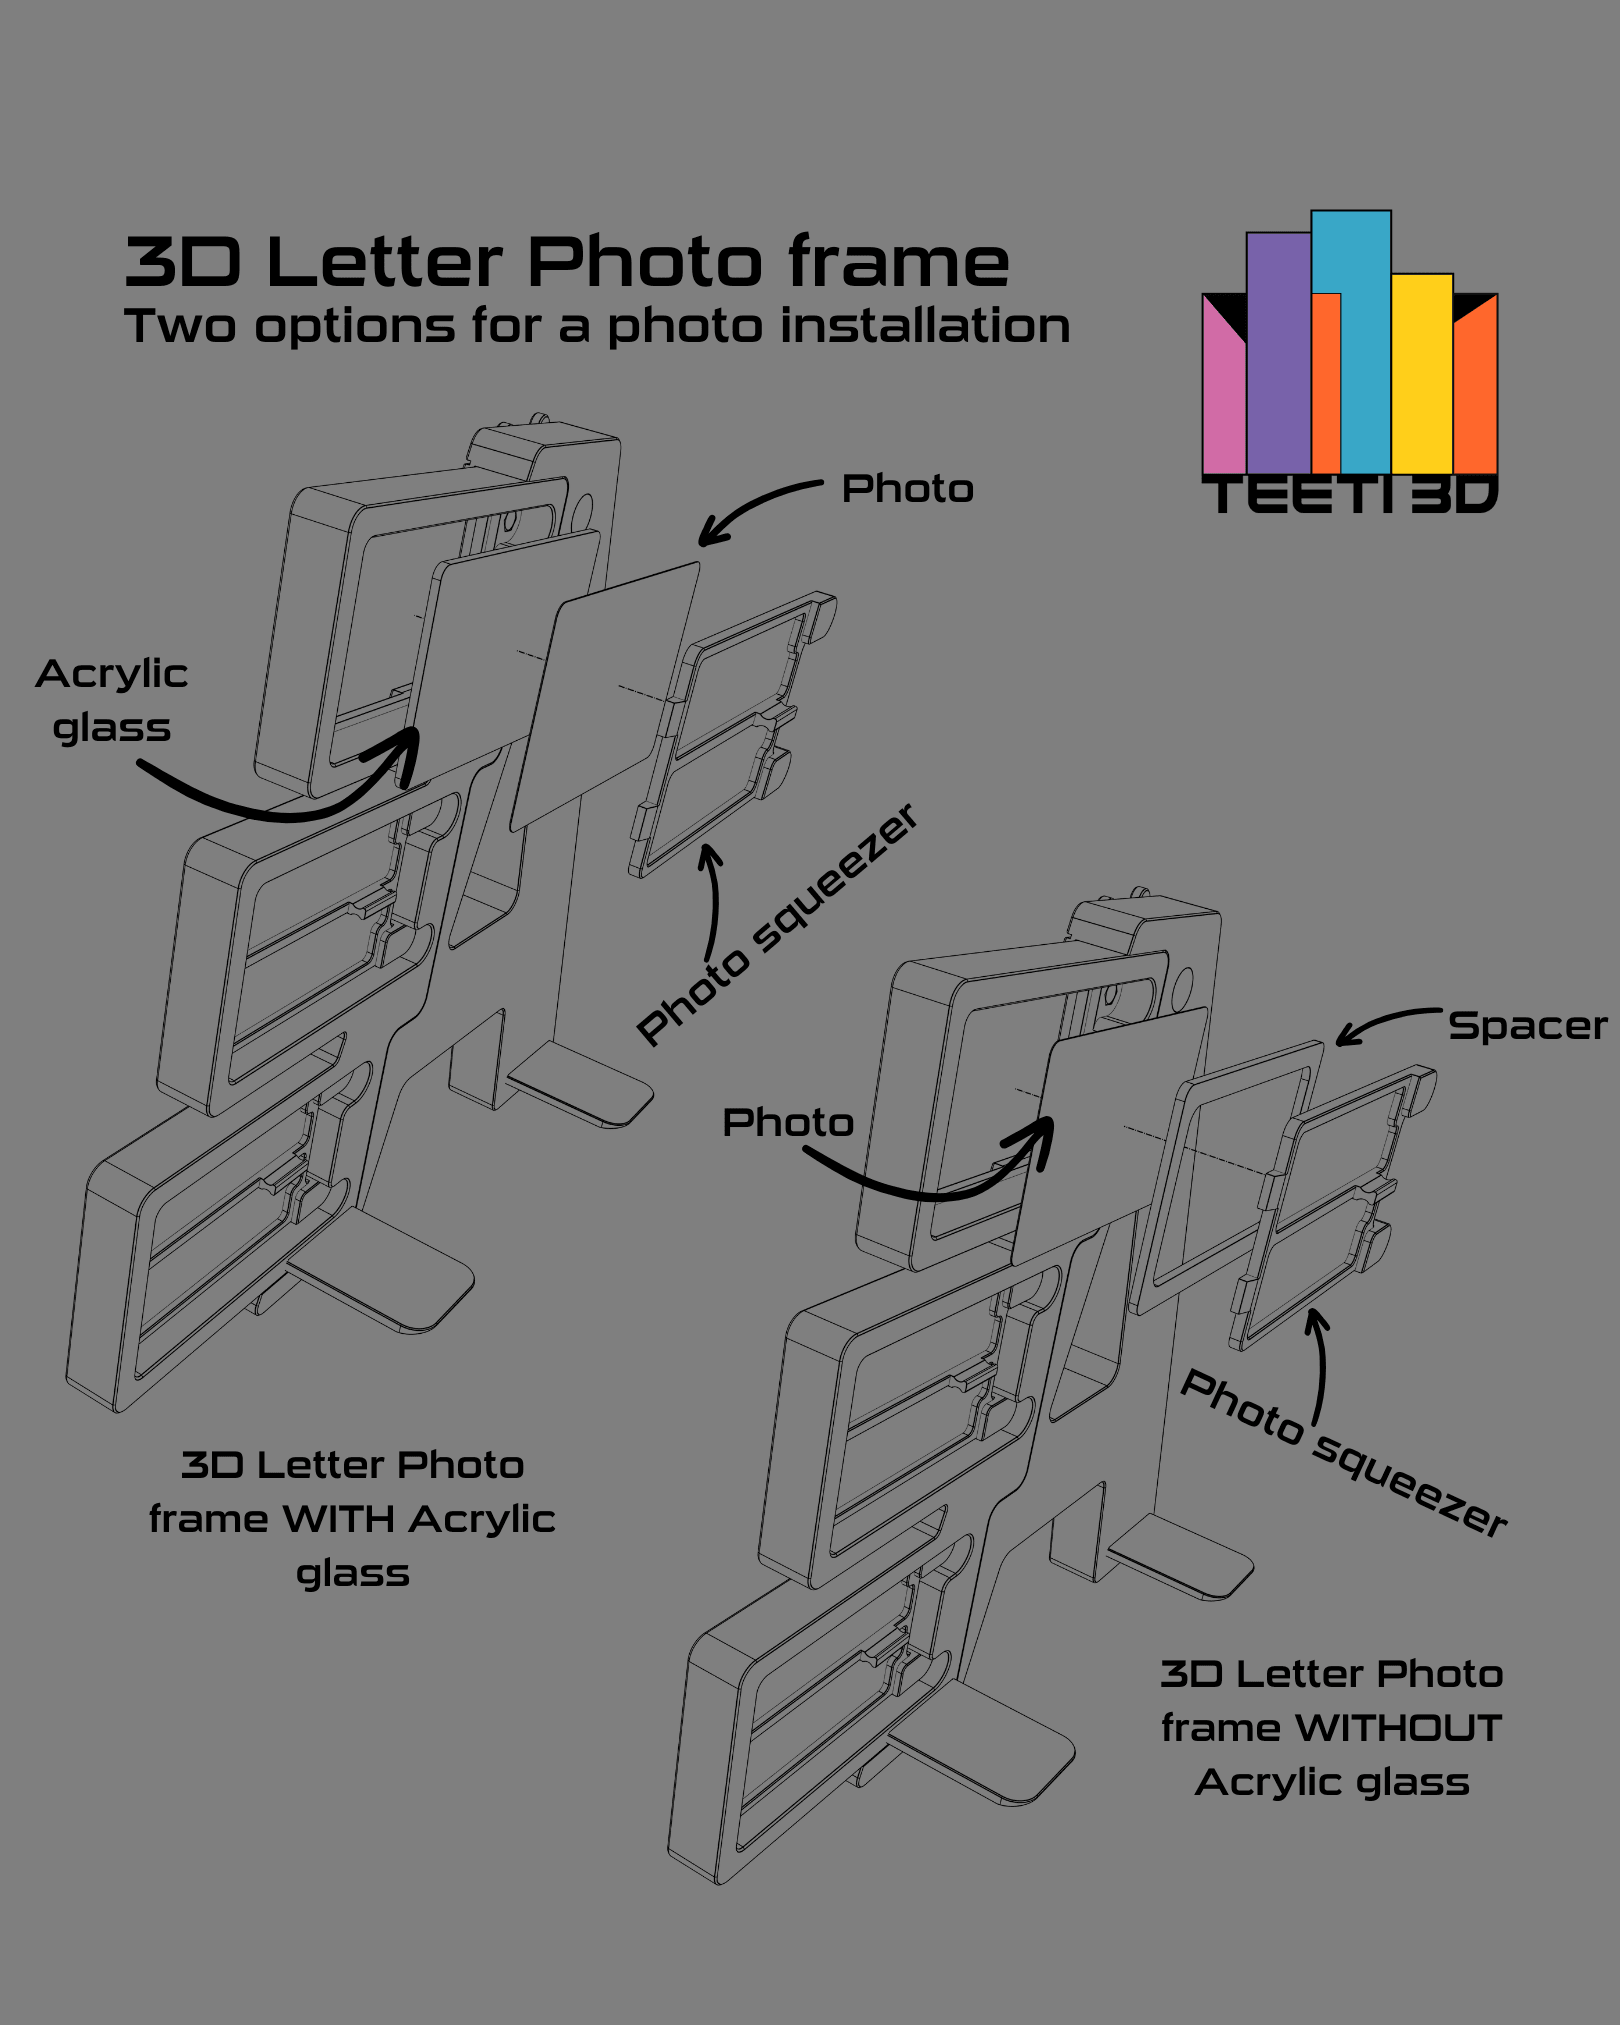 3D Letter "G" with Photo Frame 3d model